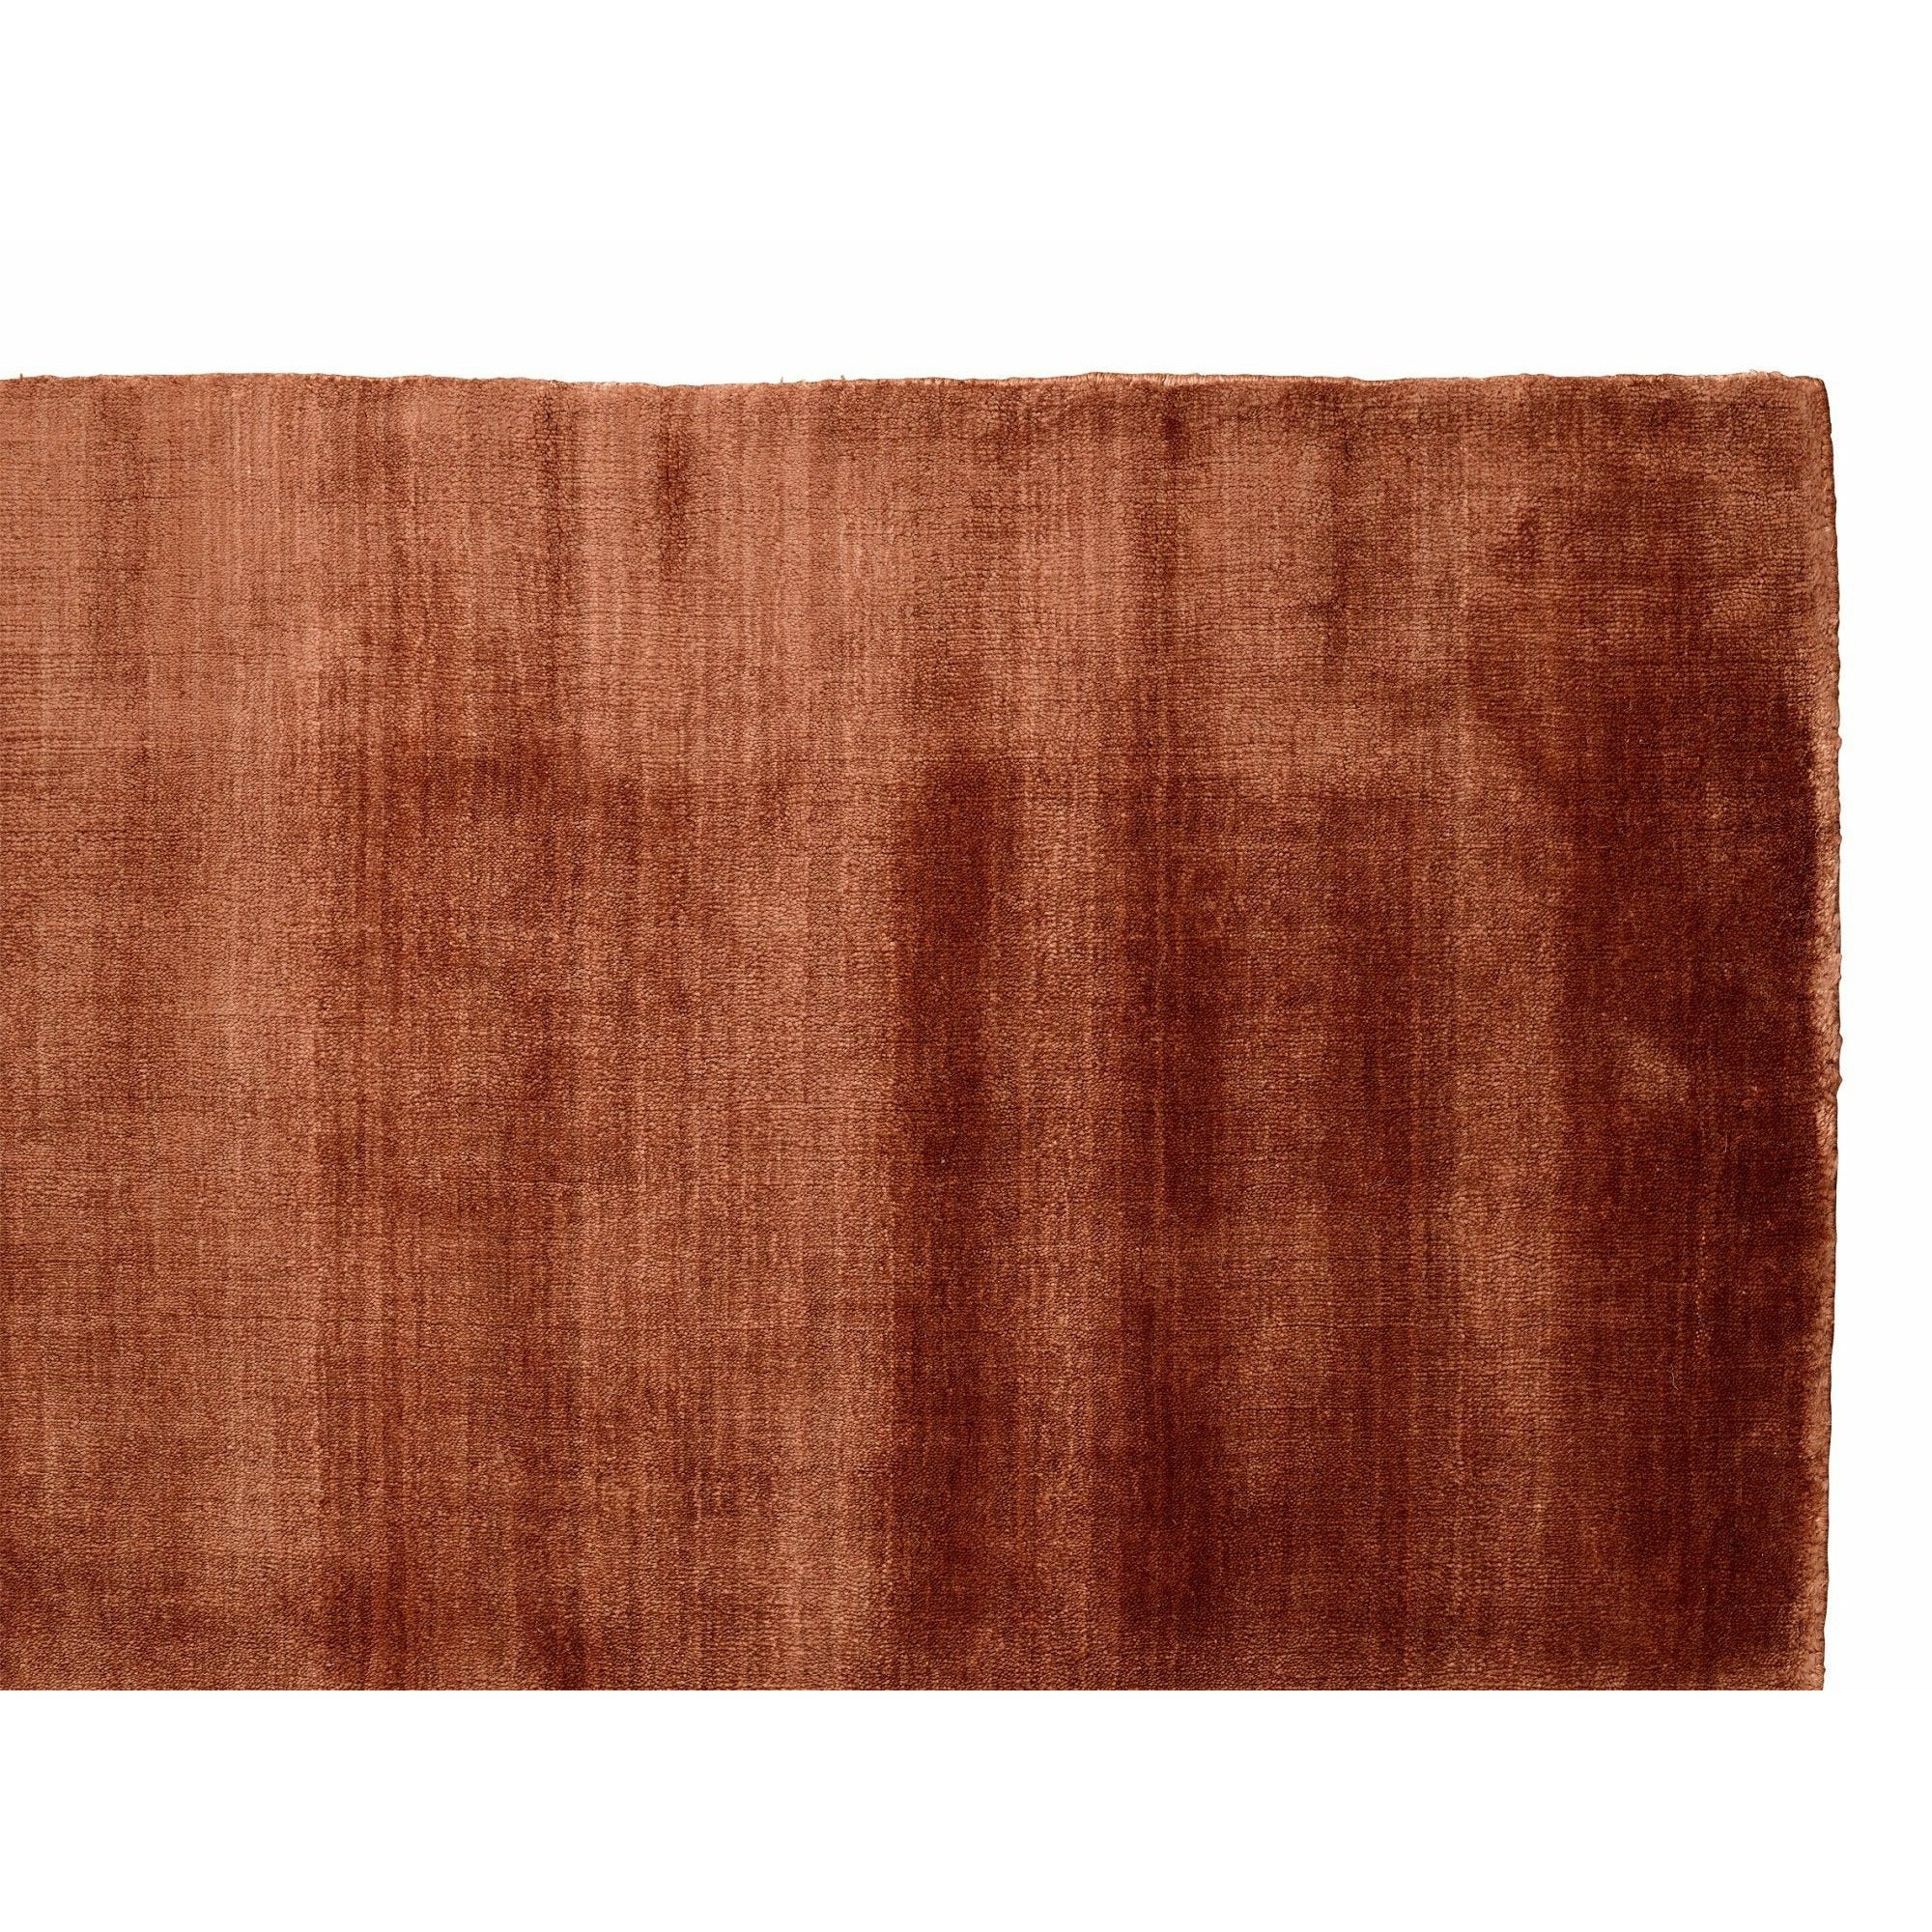 Massimo Bamboo Rug Copper, 250x300 cm